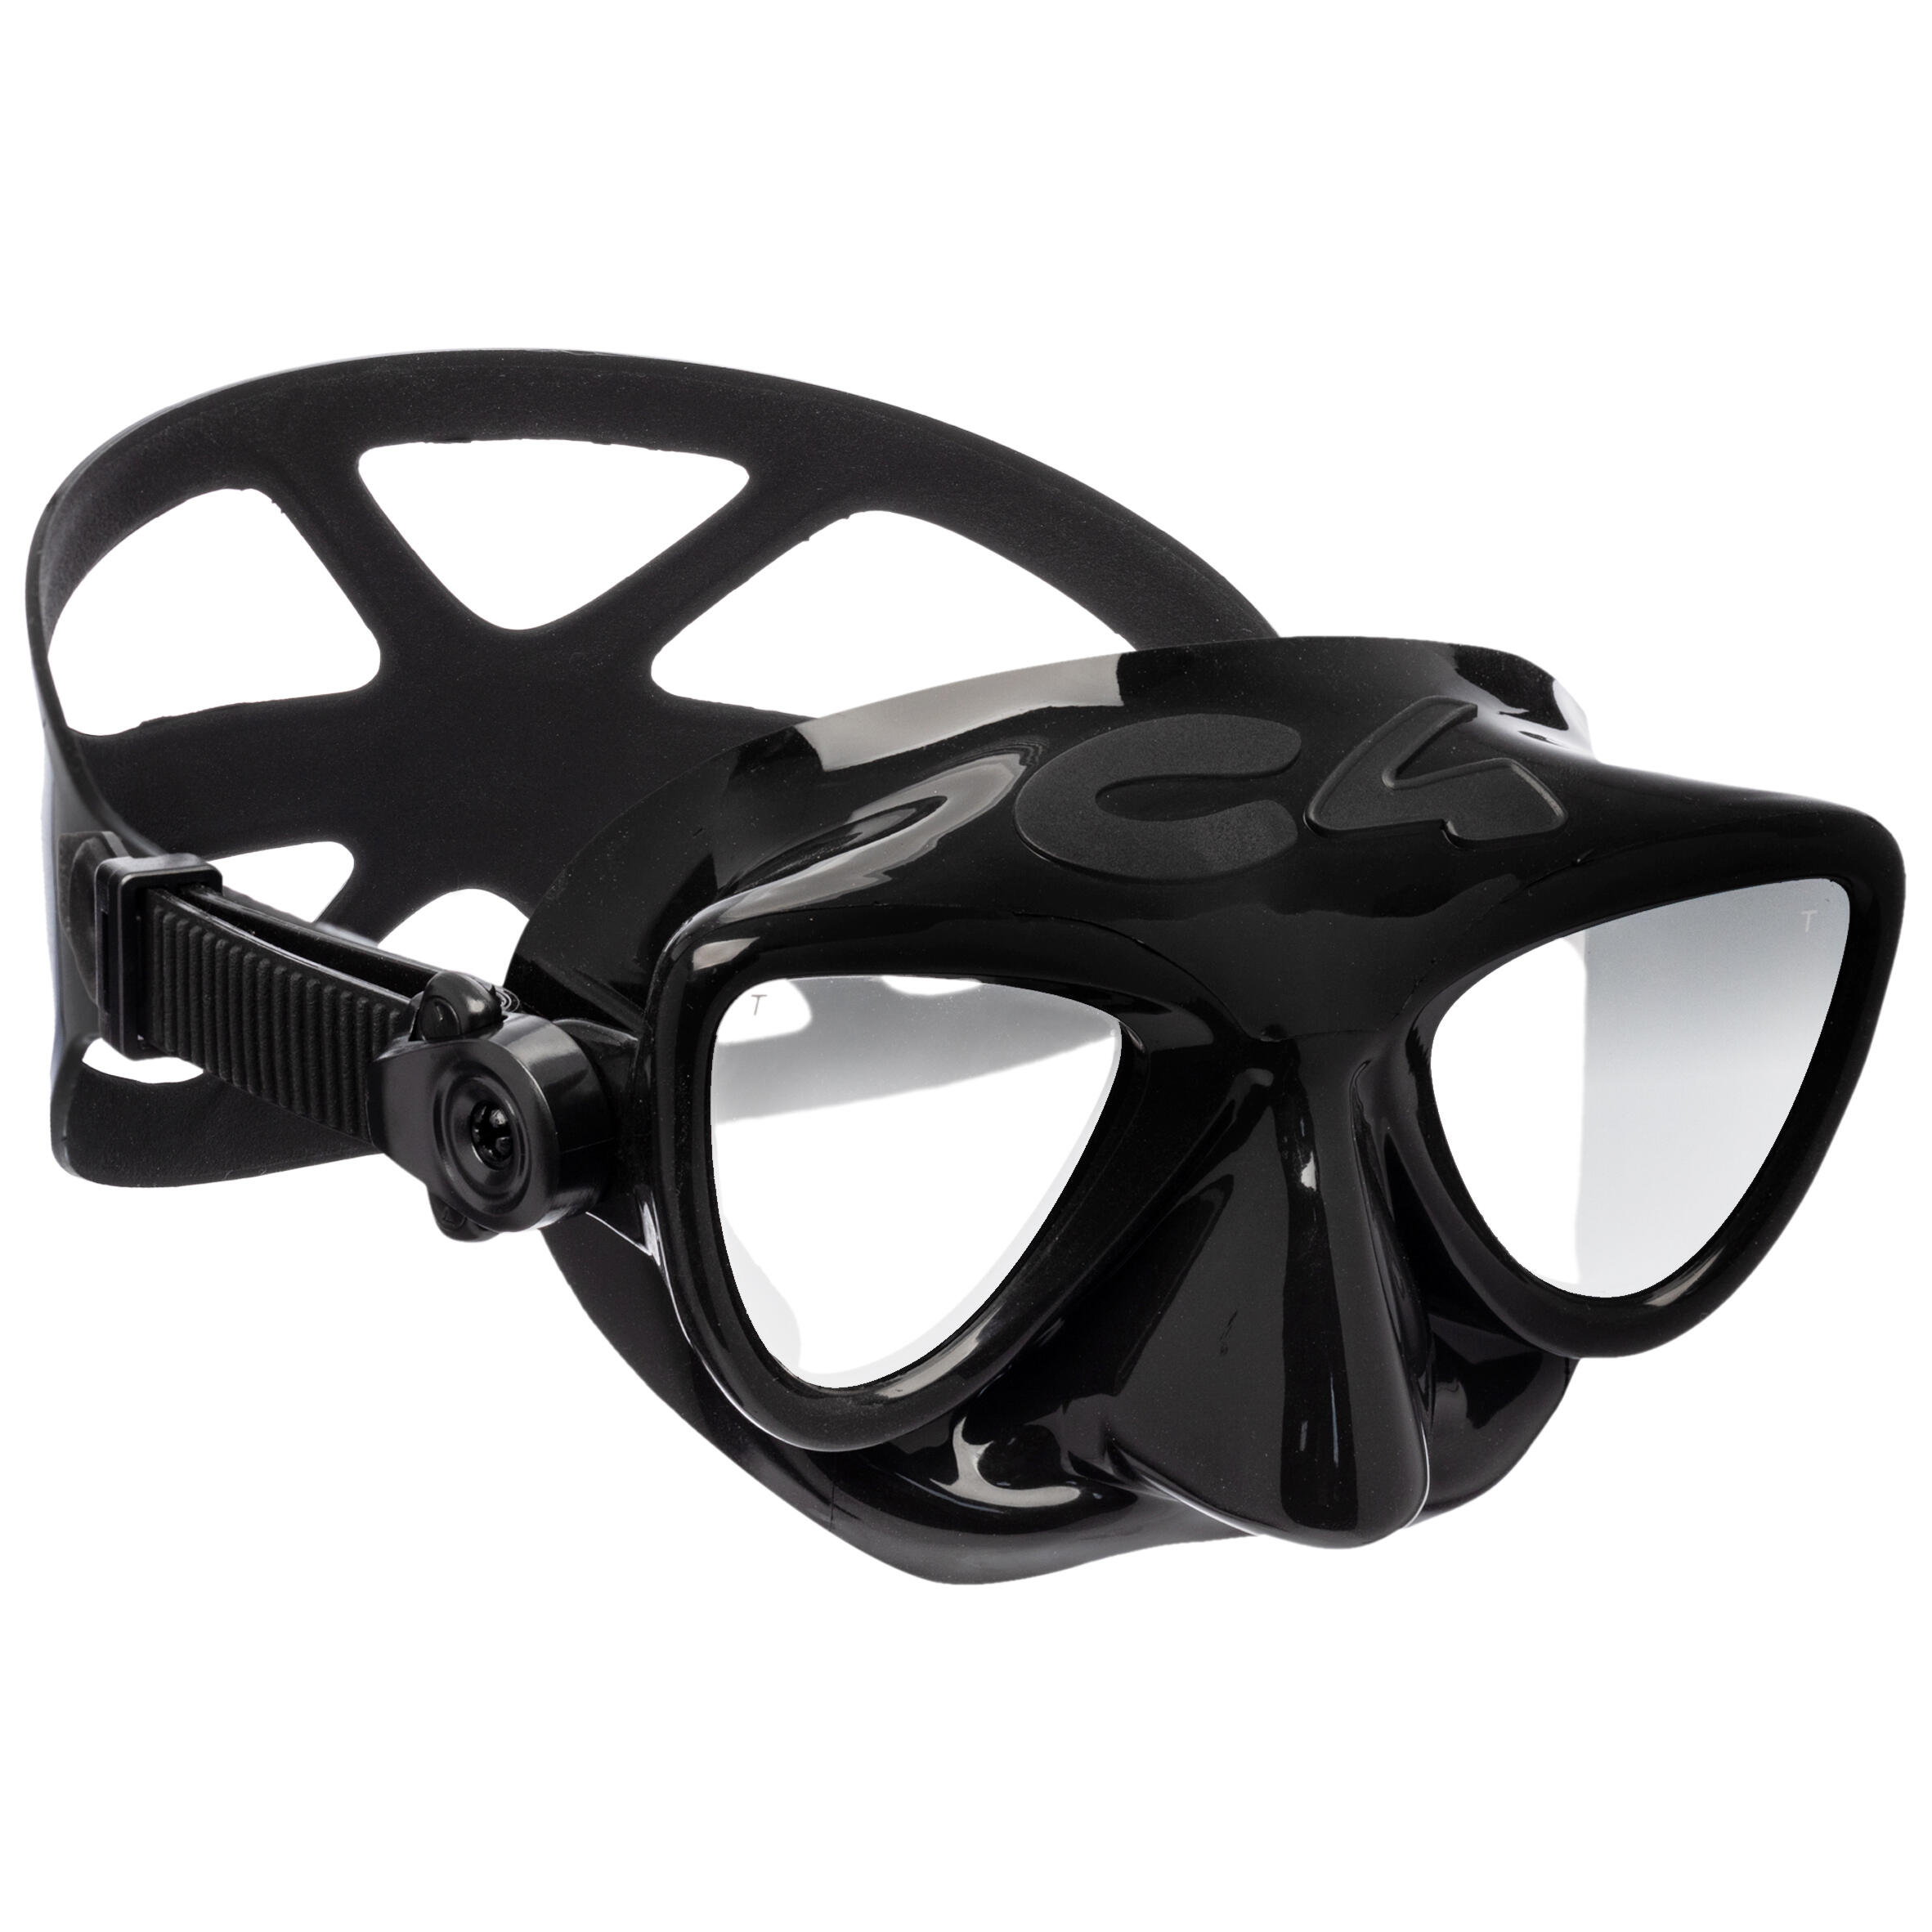 C4 CARBON Mask Plasma C4 Carbon - Black with mirror lenses